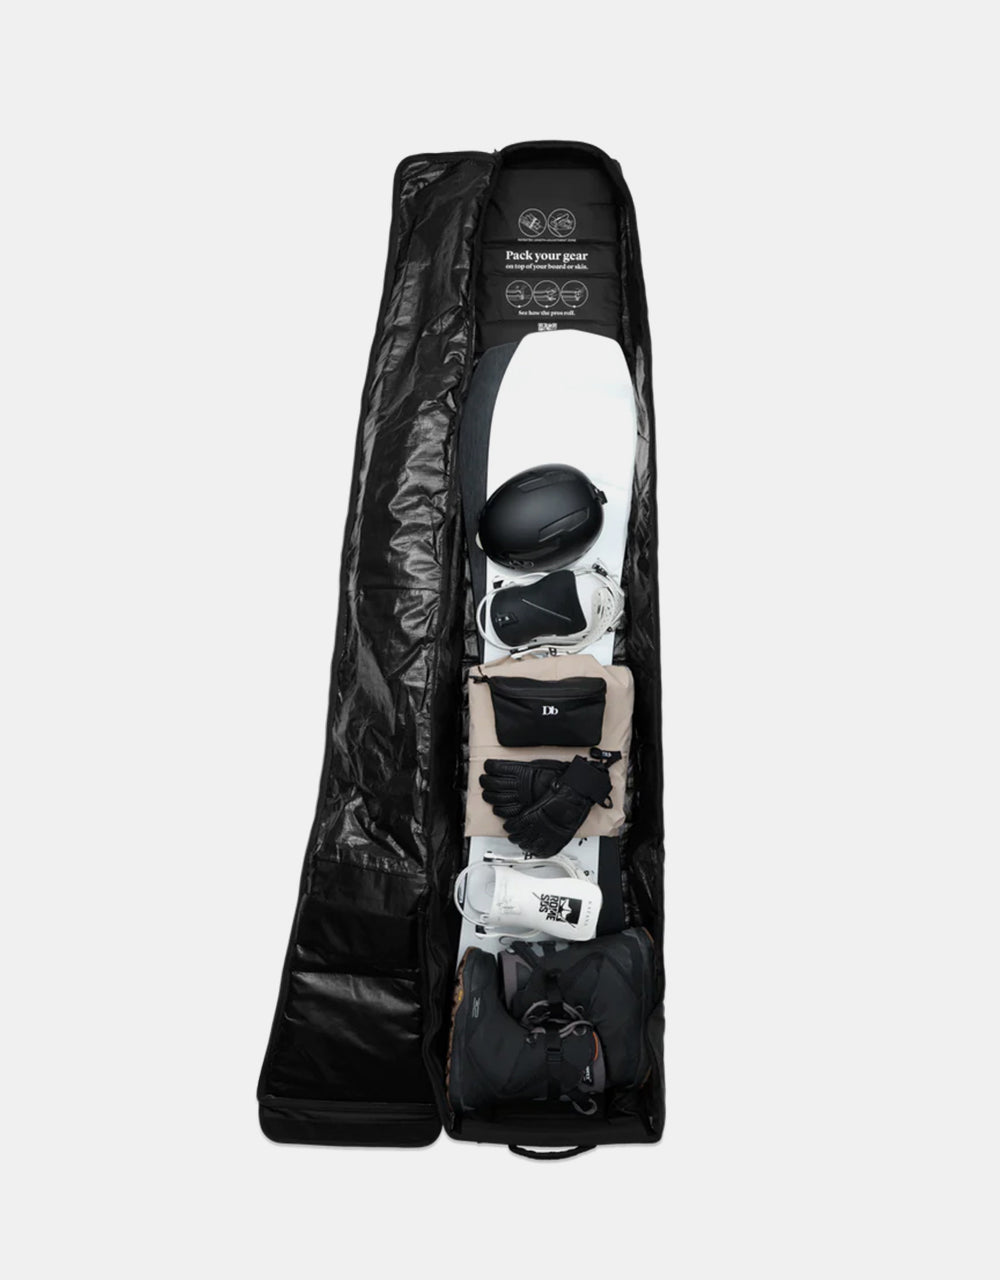 Db Pro Snow Roller Bag - Black Out